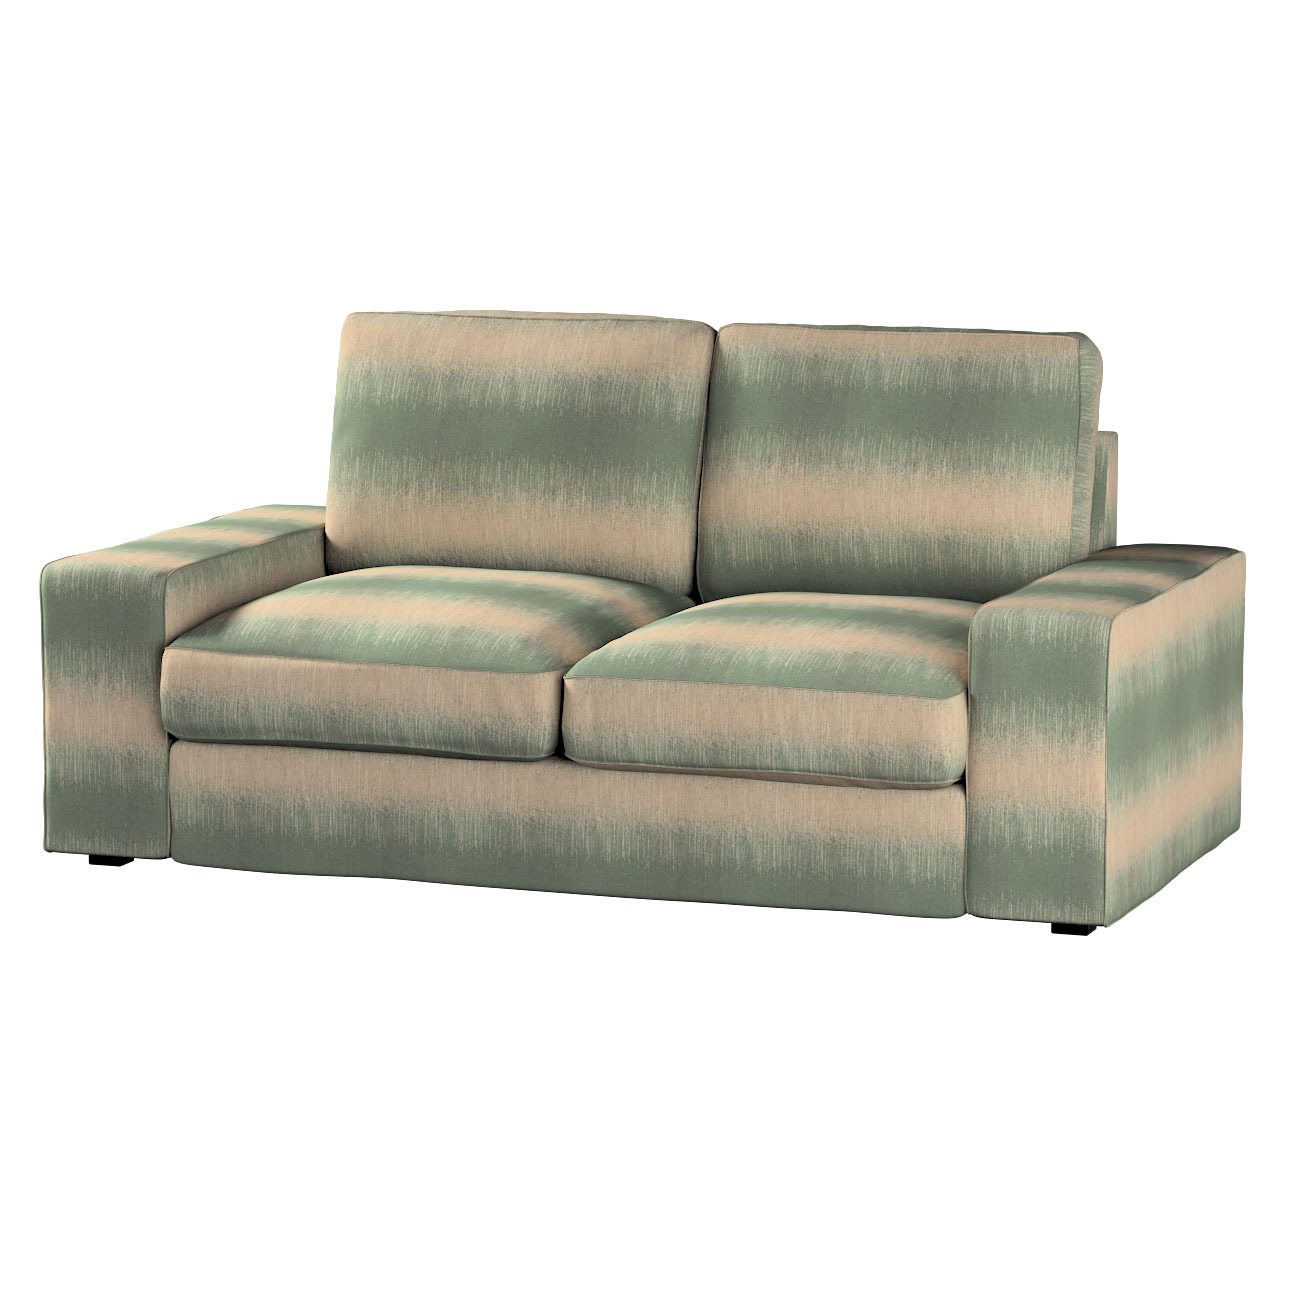 Bezug für Kivik 2-Sitzer Sofa, grün-beige, Bezug für Sofa Kivik 2-Sitzer, L günstig online kaufen